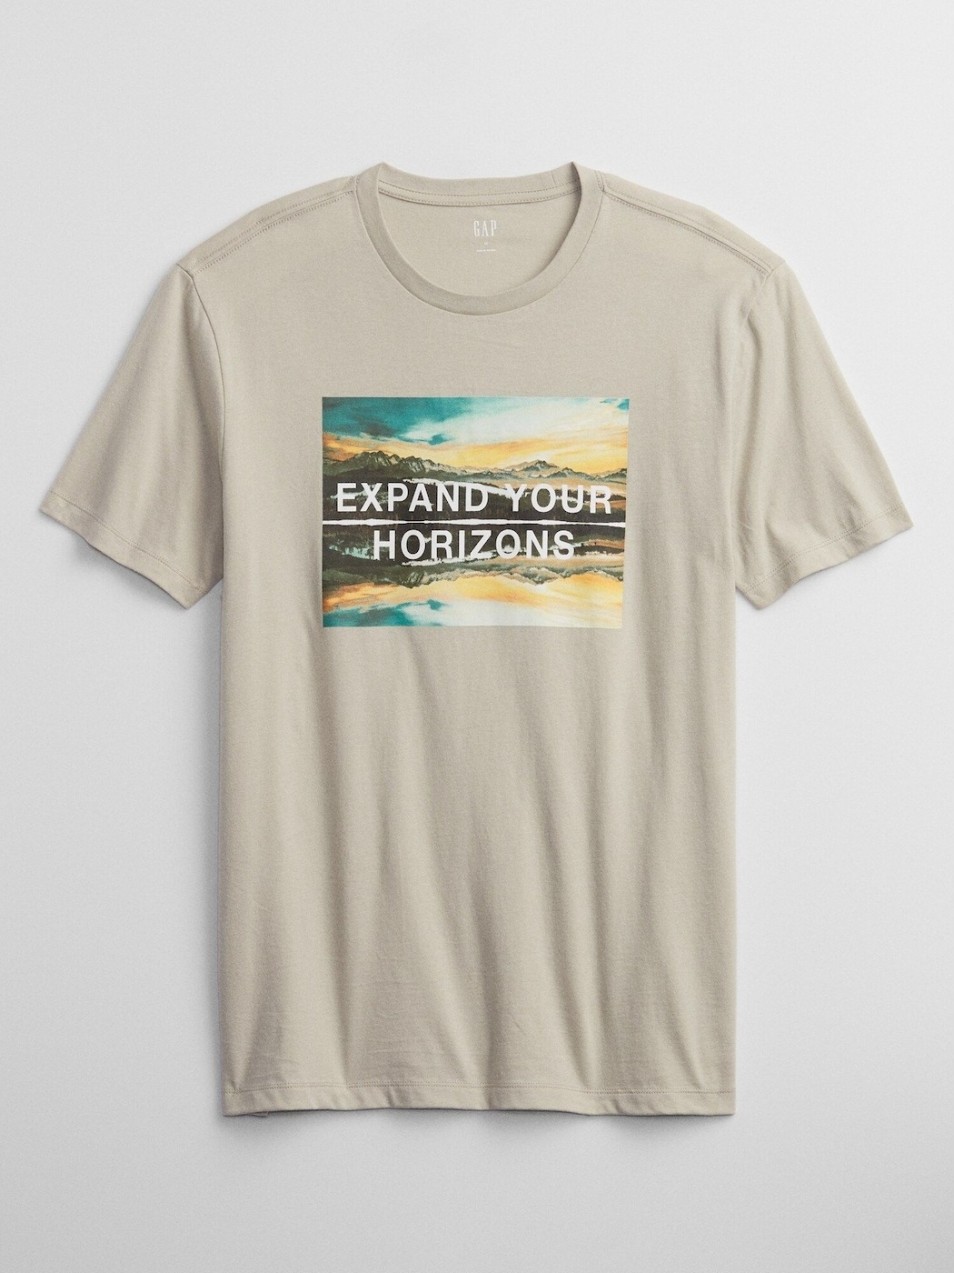 GAP T-shirt expand your horizons t-shirt - Men's